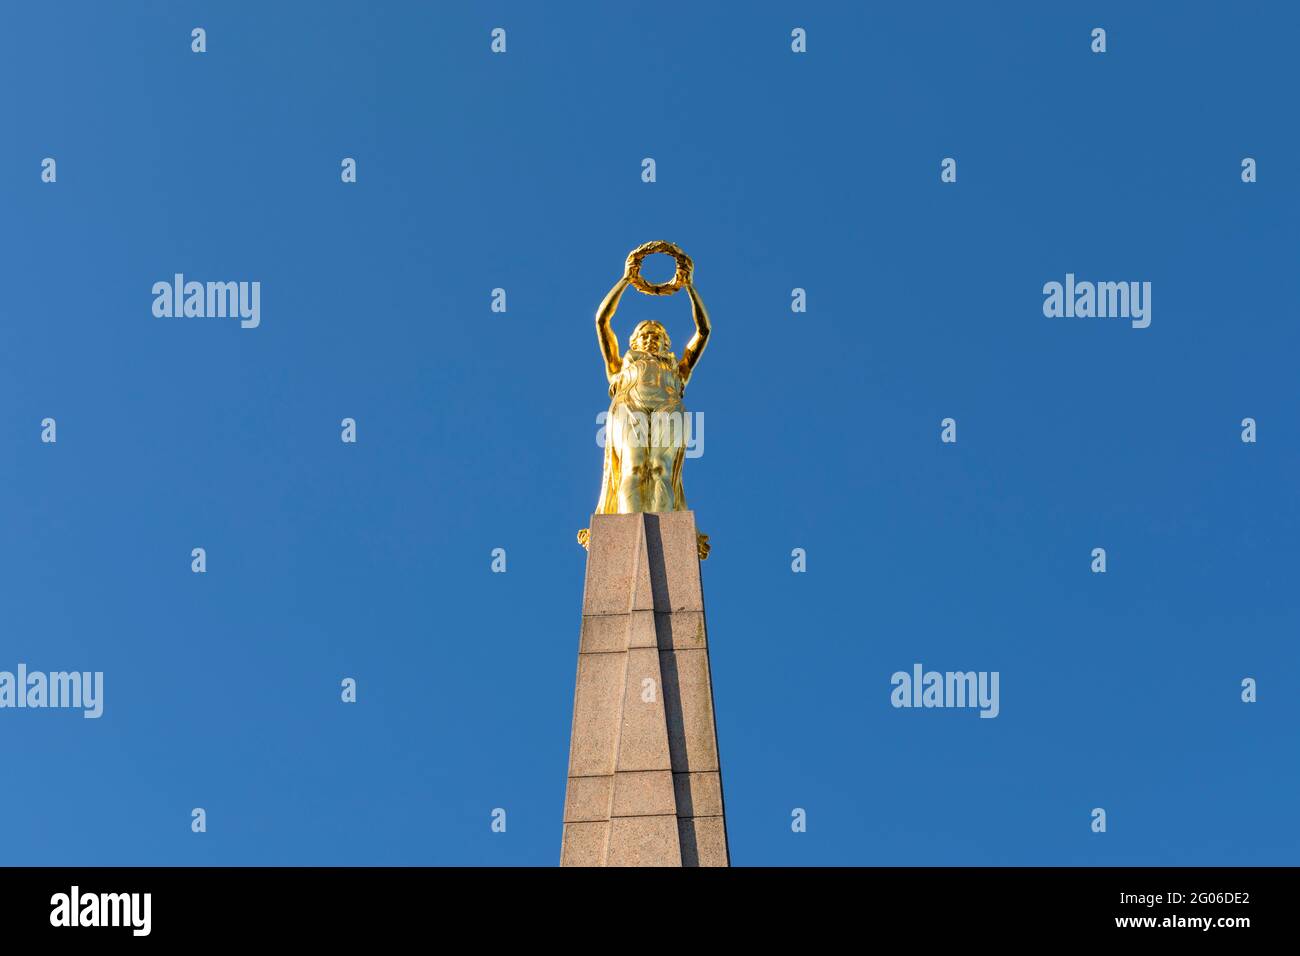 Europa, Lussemburgo, Lussemburgo, Città del Lussemburgo, Gëlle fra (Madonna d'oro) in cima al Monumento della memoria (Monument du souvenir) Foto Stock